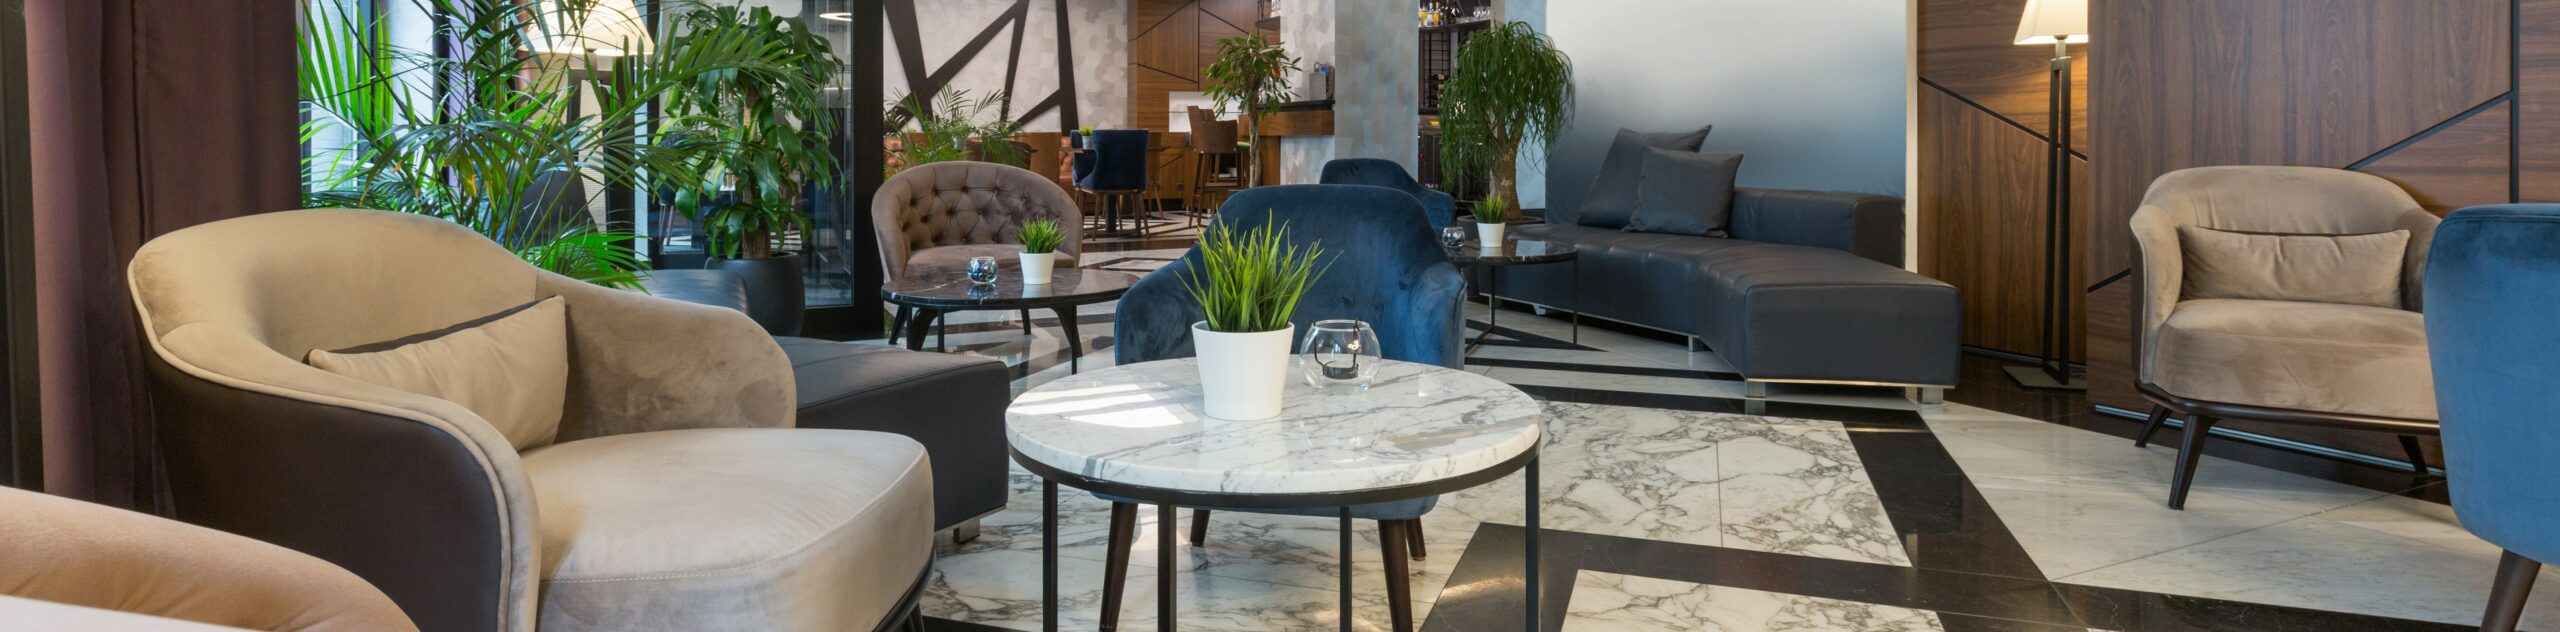 Interior Of A Modern Hotel Lounge Cafe Bar Restaurant